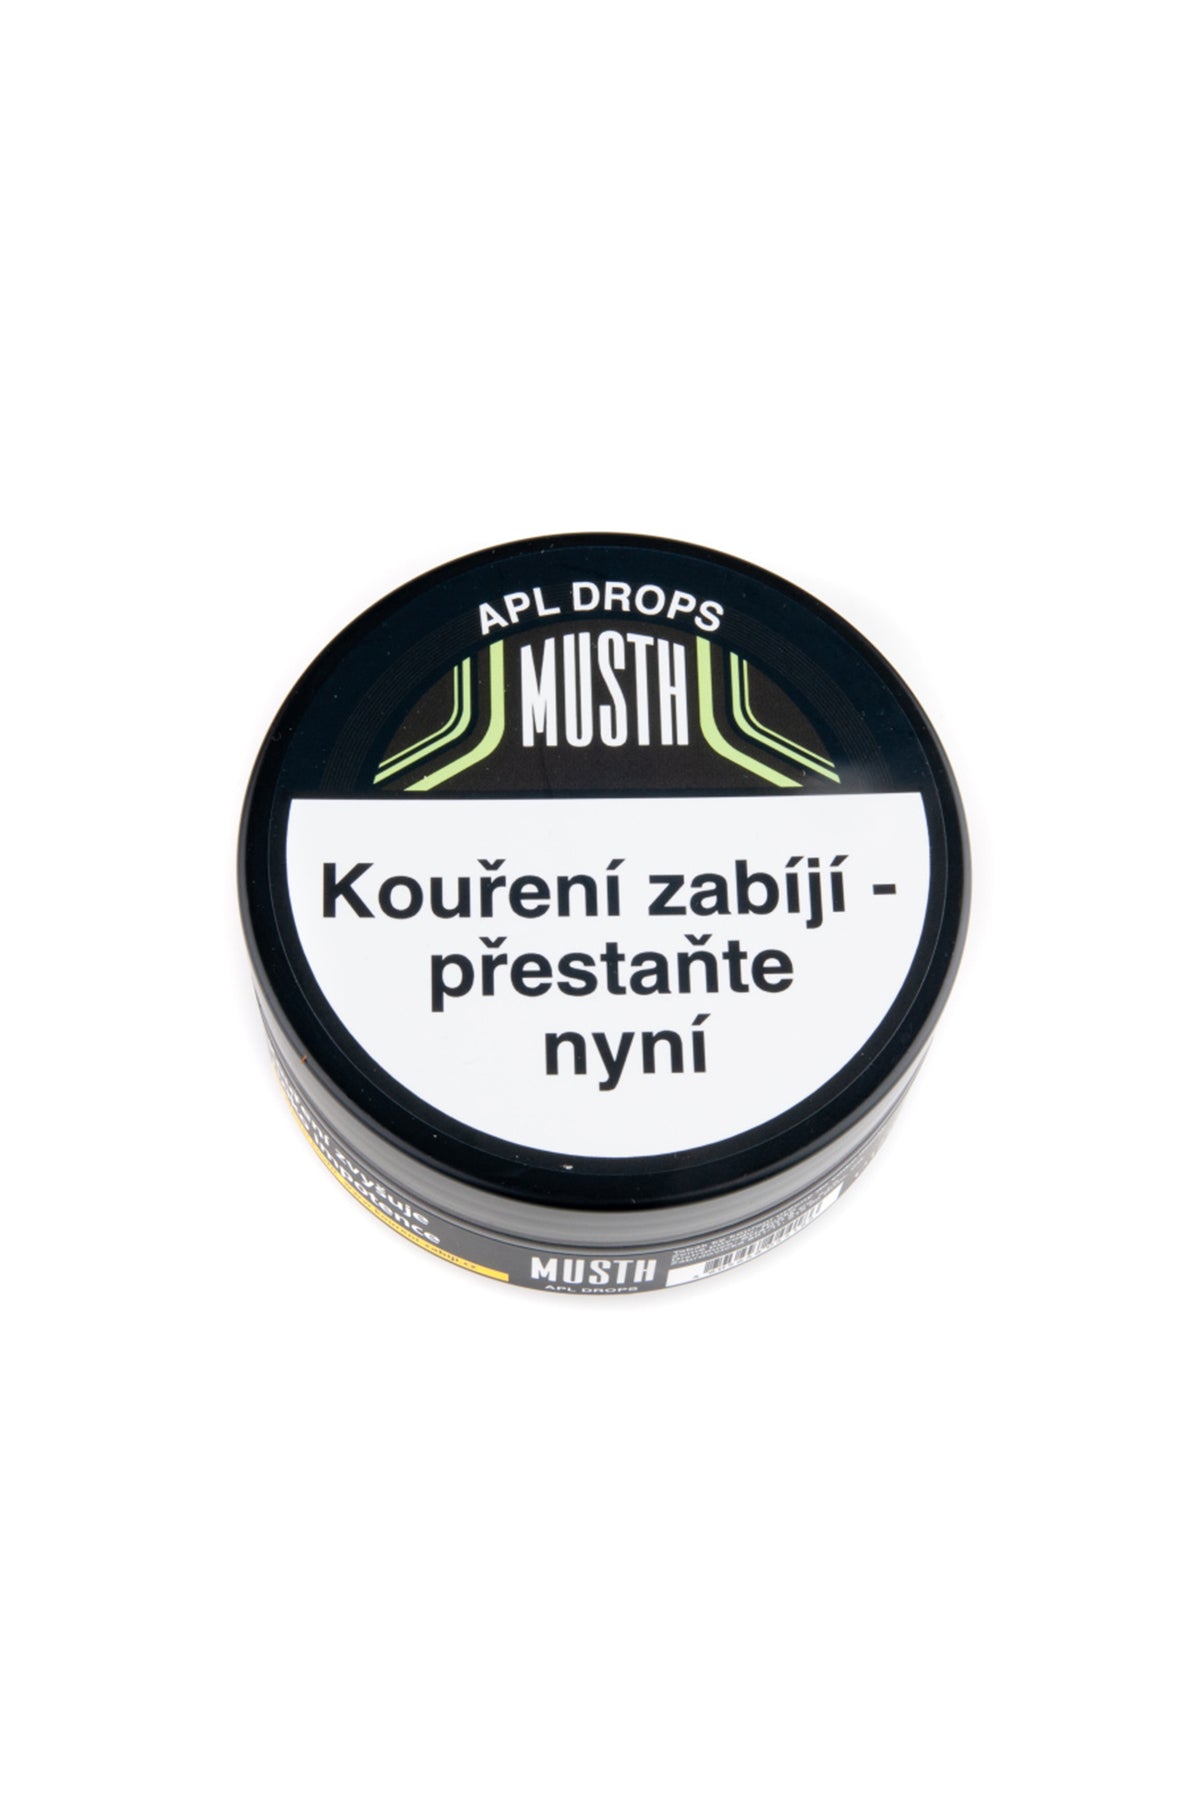 Tabák - MustH 125g - Apl Drops